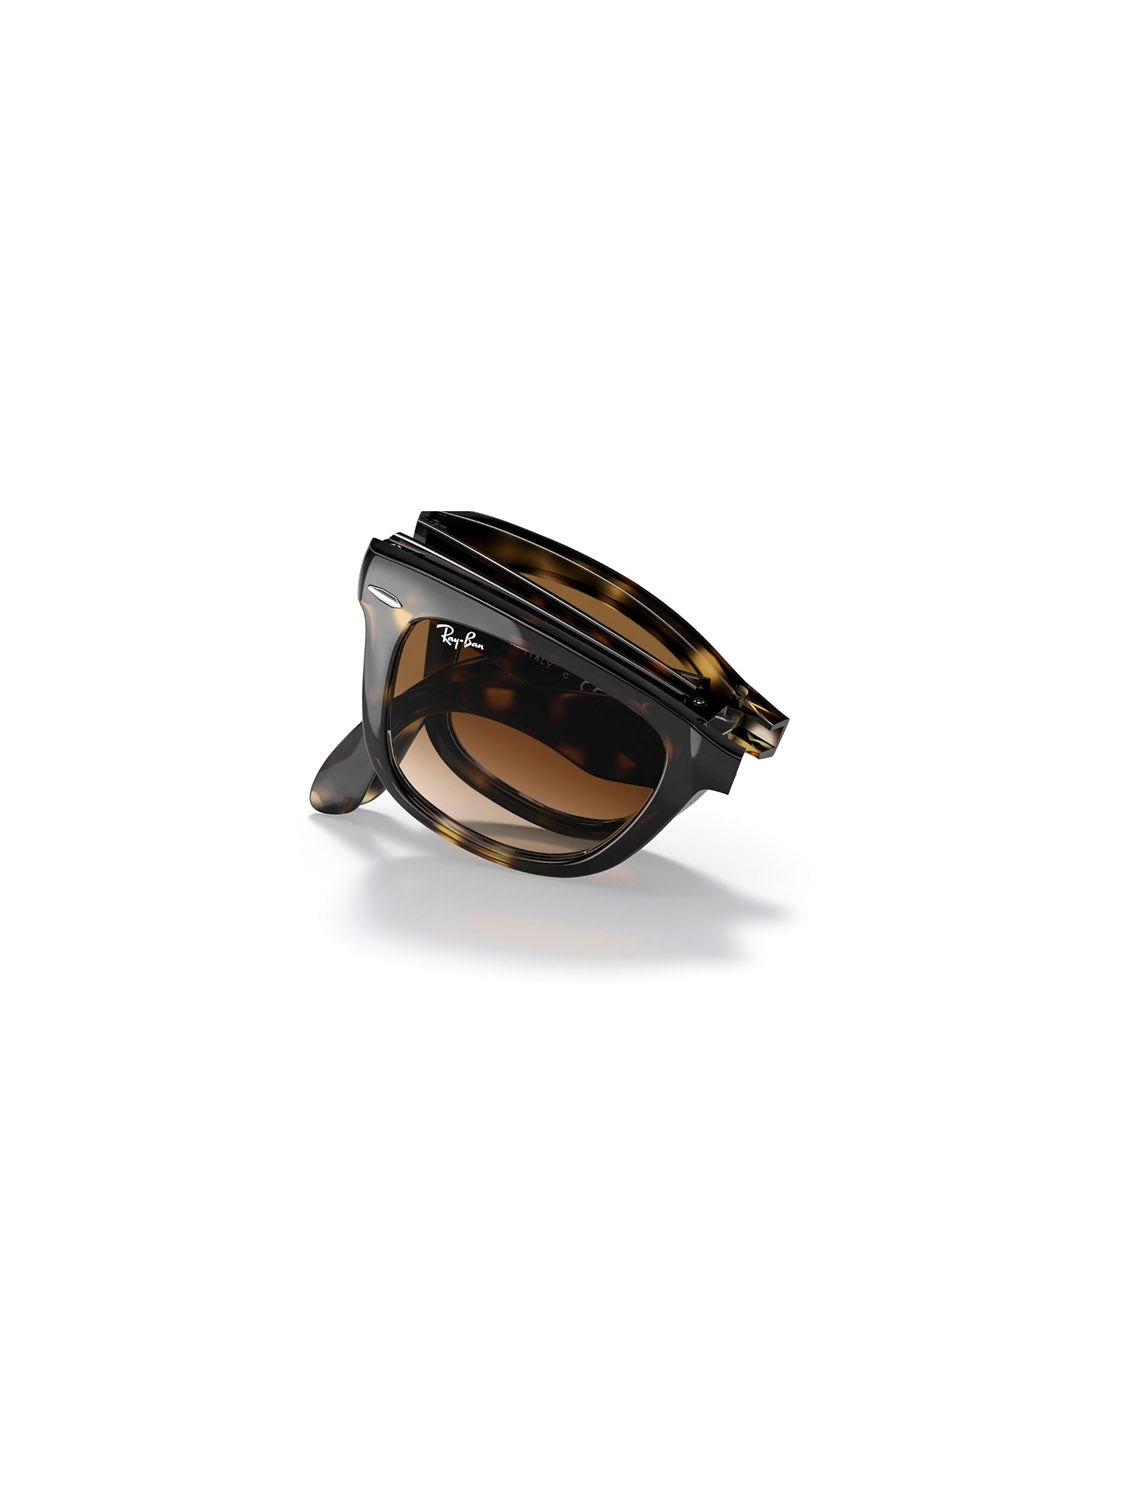 Ray Ban - RB4105 Wayfarer Folding Classic Sunglasses